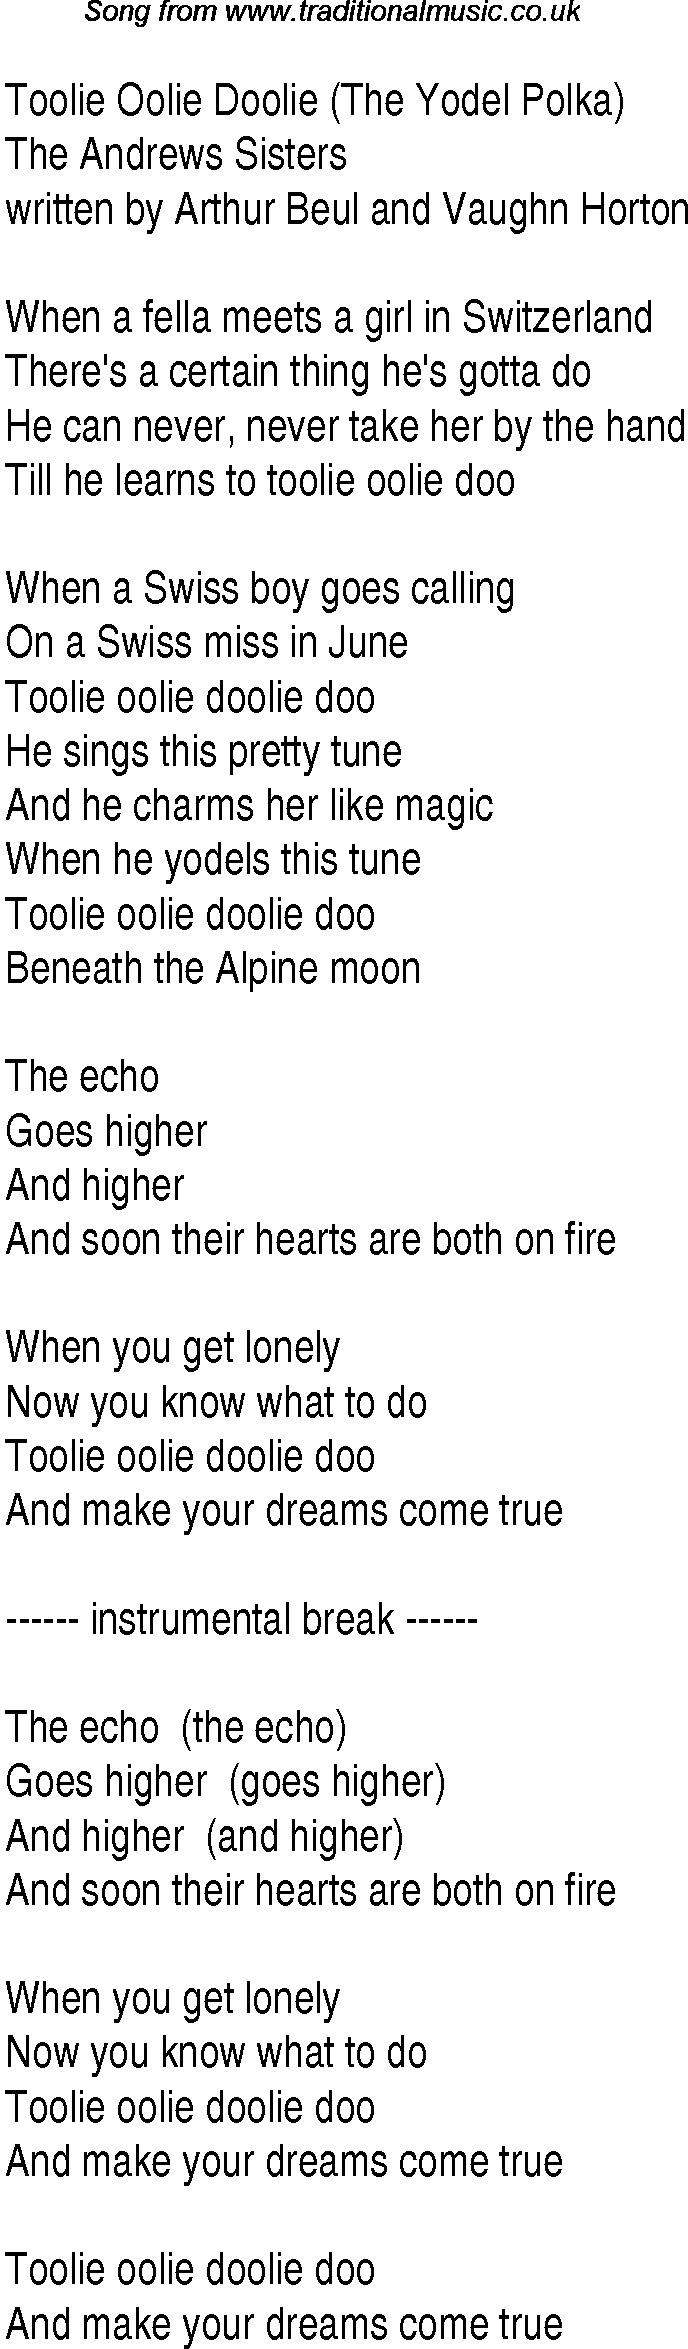 Music charts top songs 1949 - lyrics for Toolie Oolie Doolie